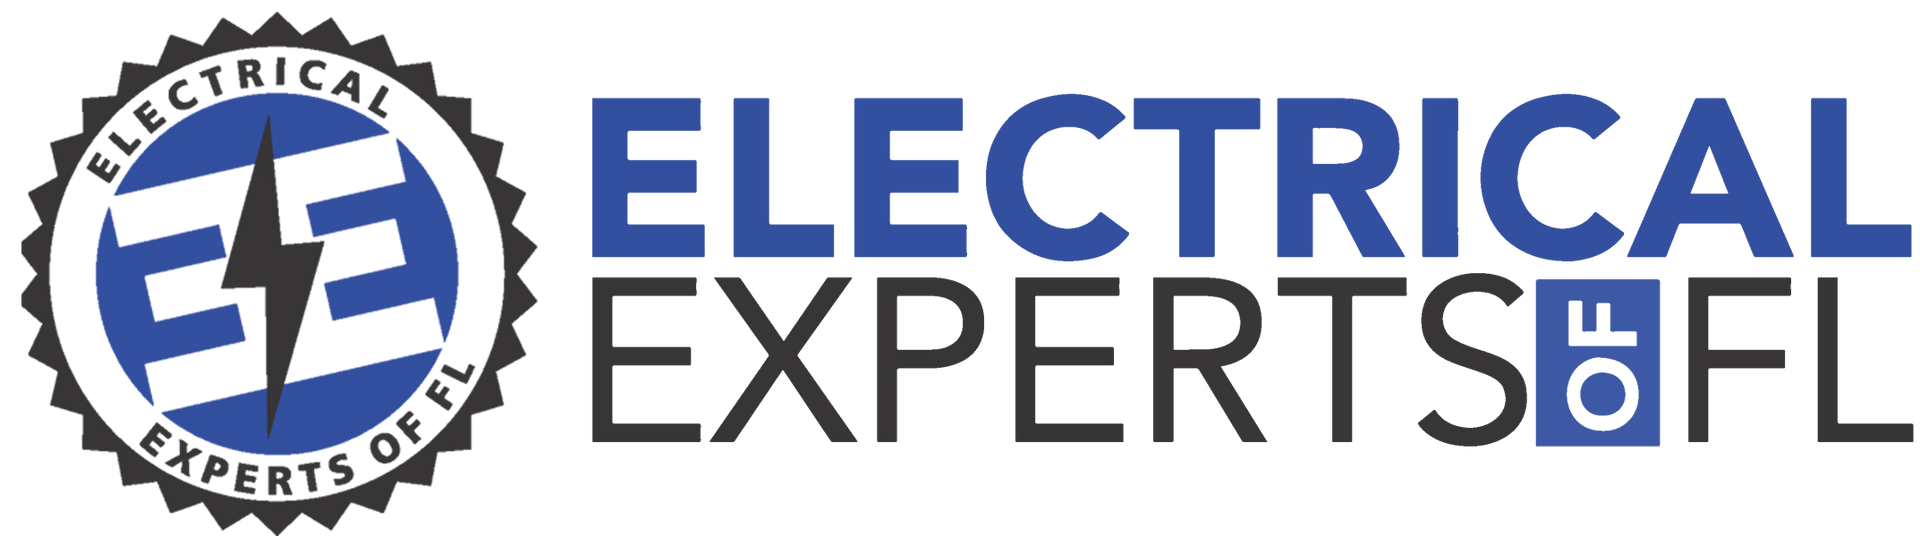 Electrical Experts of Florida logo